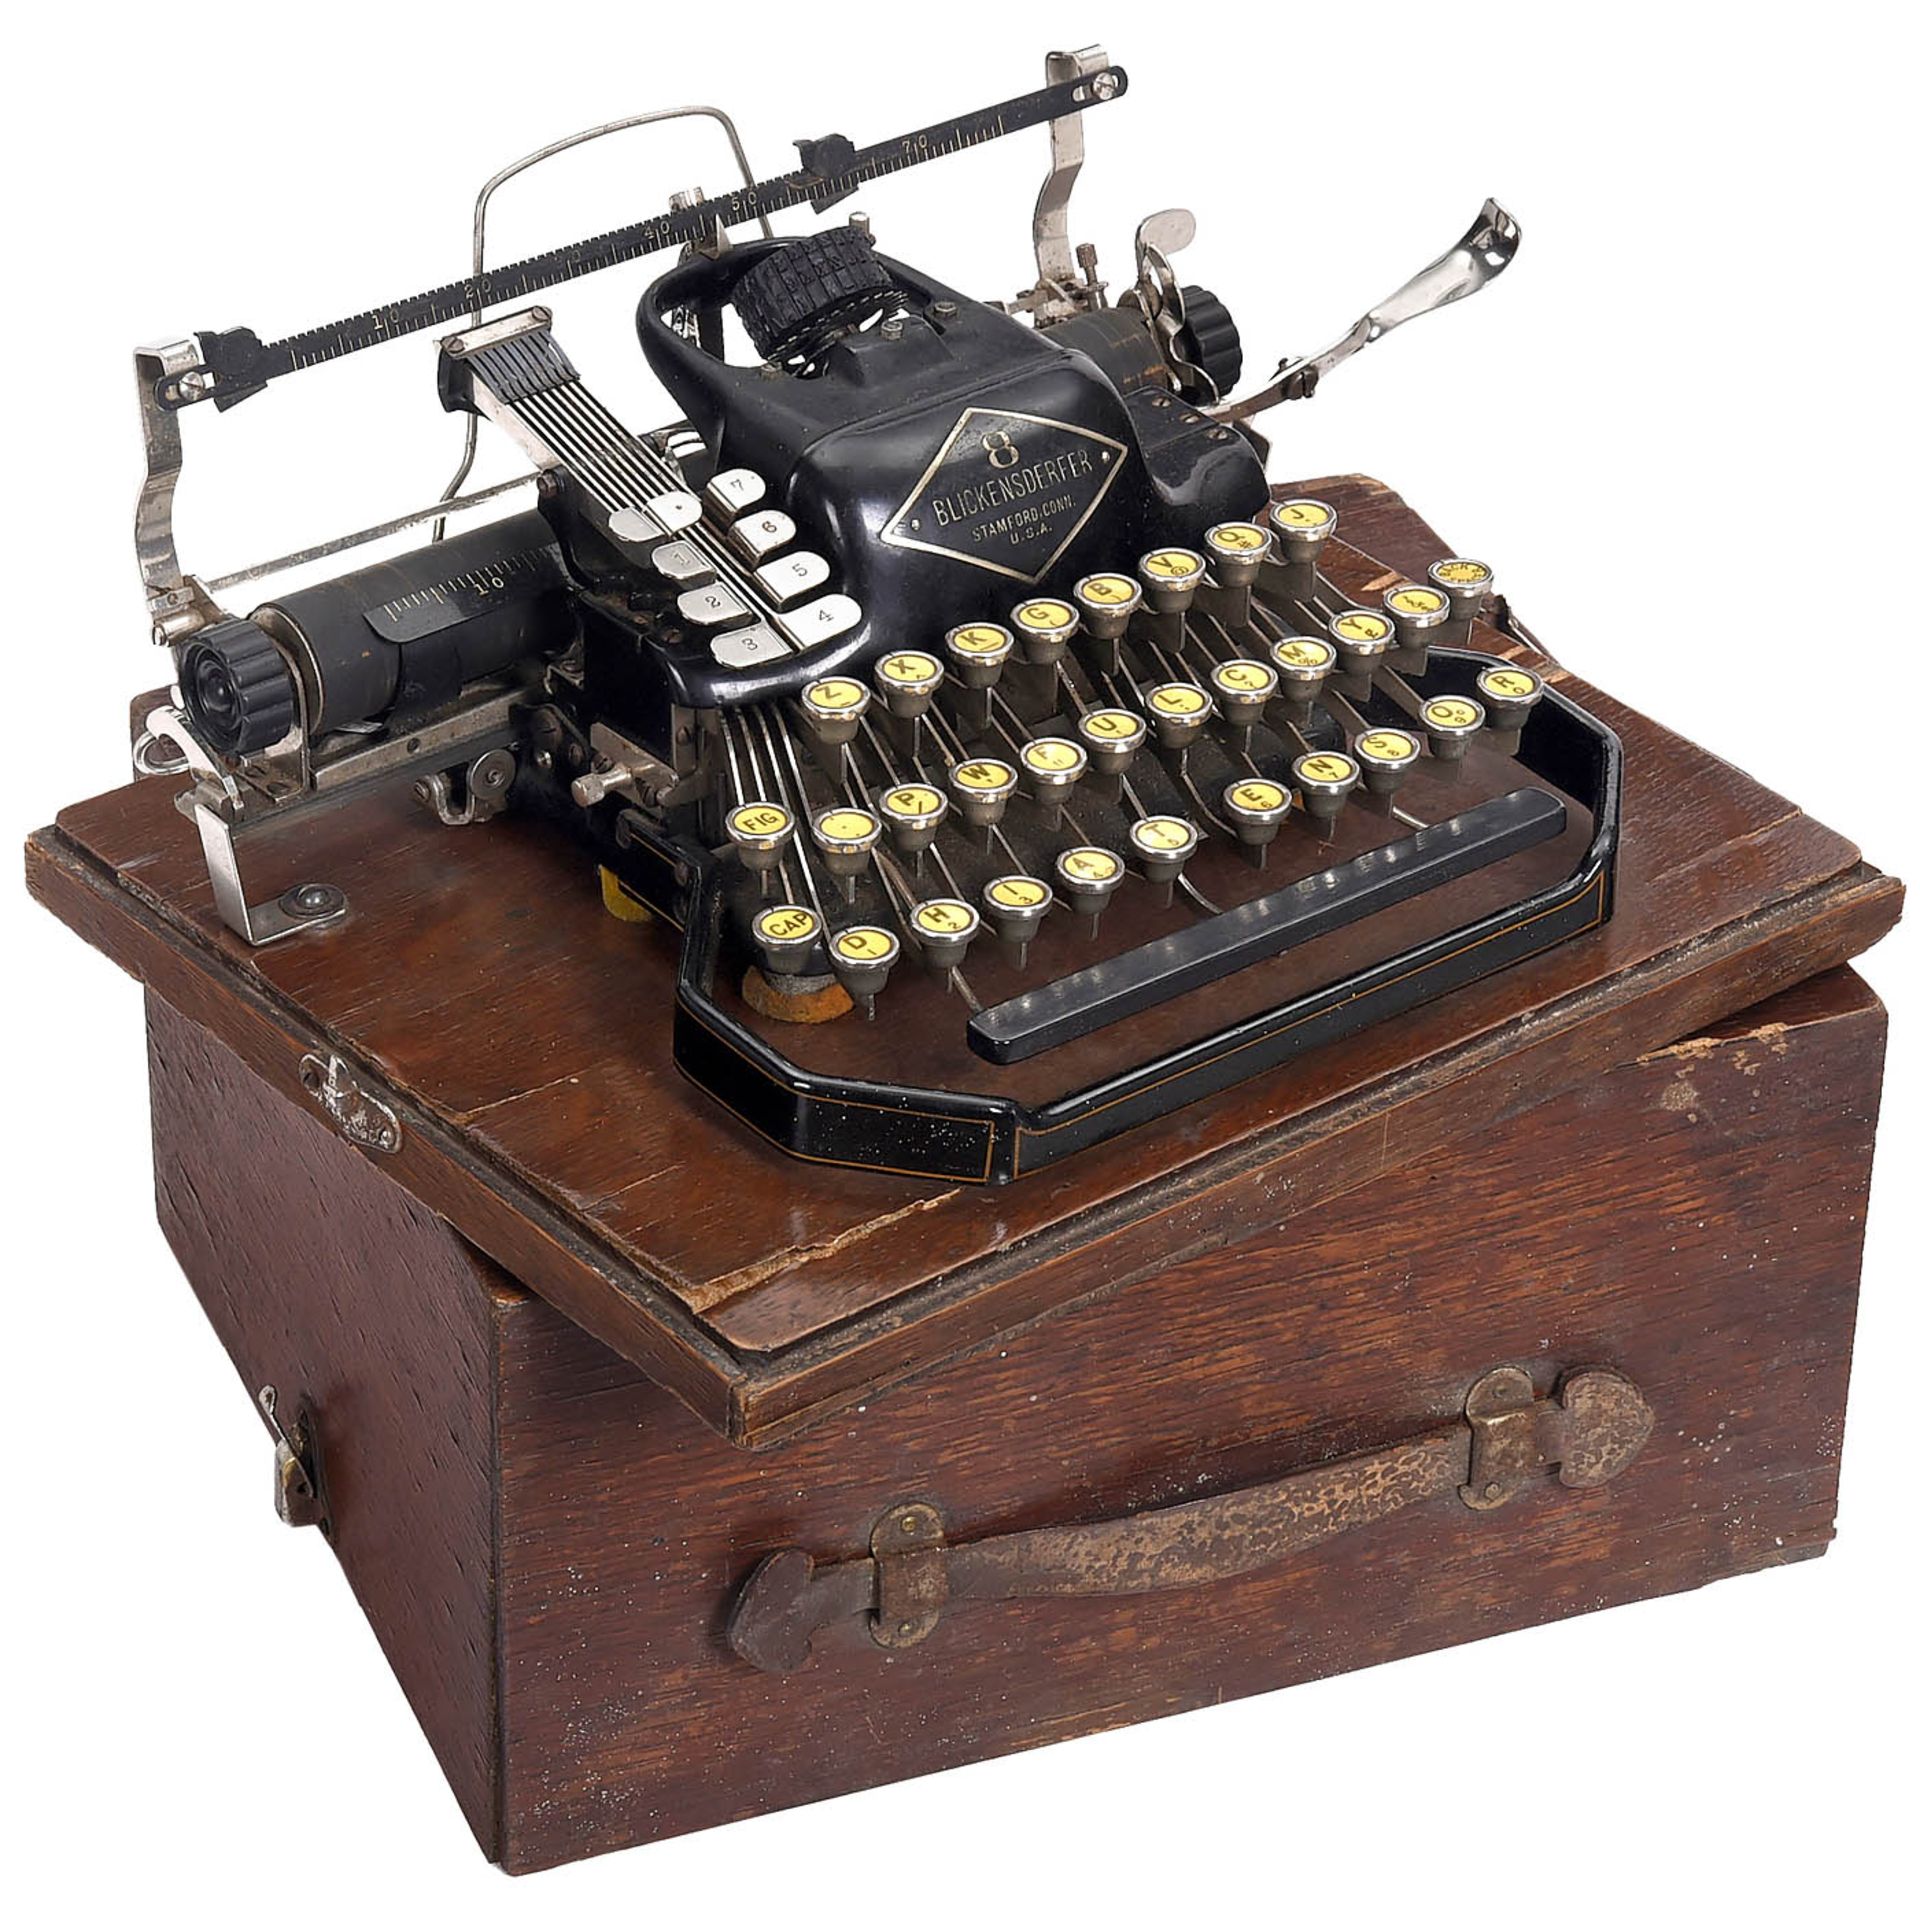 2 Blickensderfer Typewriters - Image 2 of 3